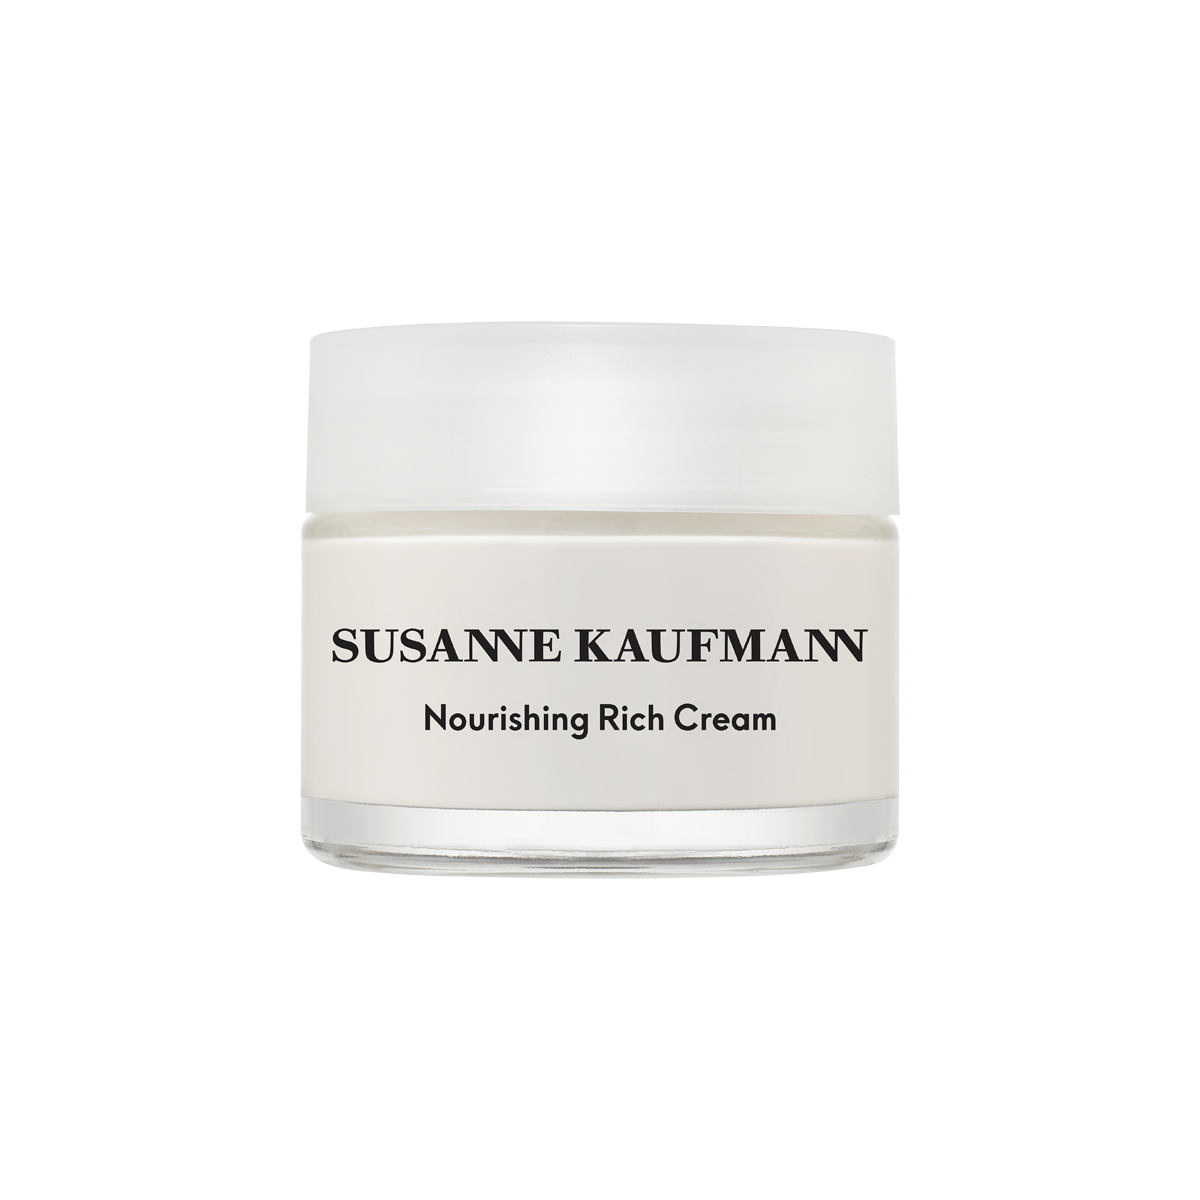 Susanne Kaufmann - Nourishing Rich Cream